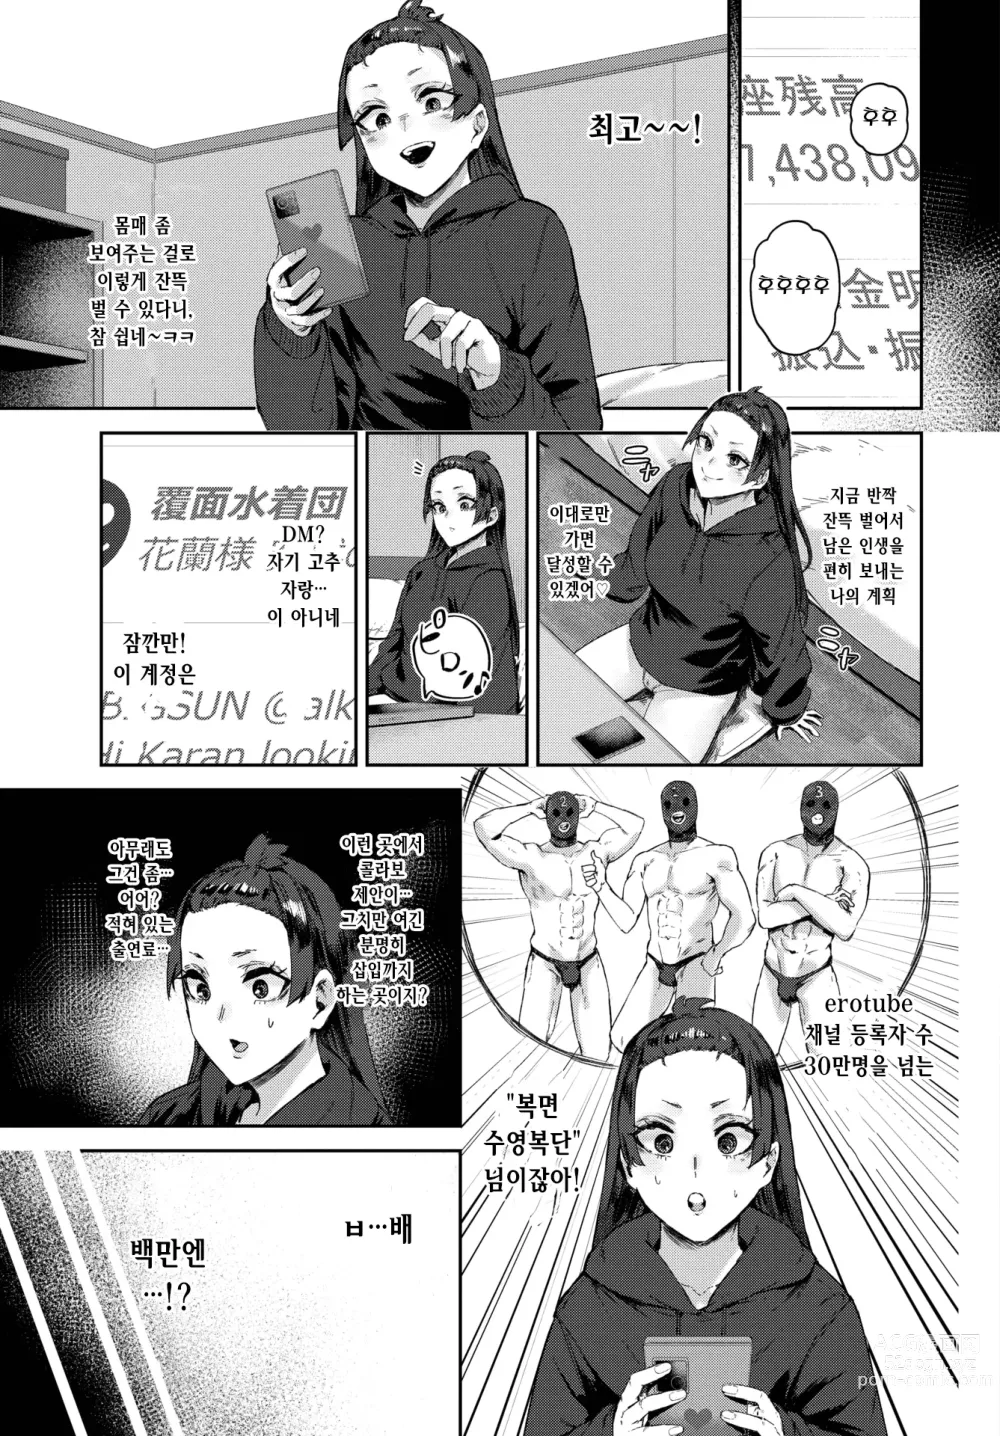 Page 3 of manga 「좋아」를 위해서면